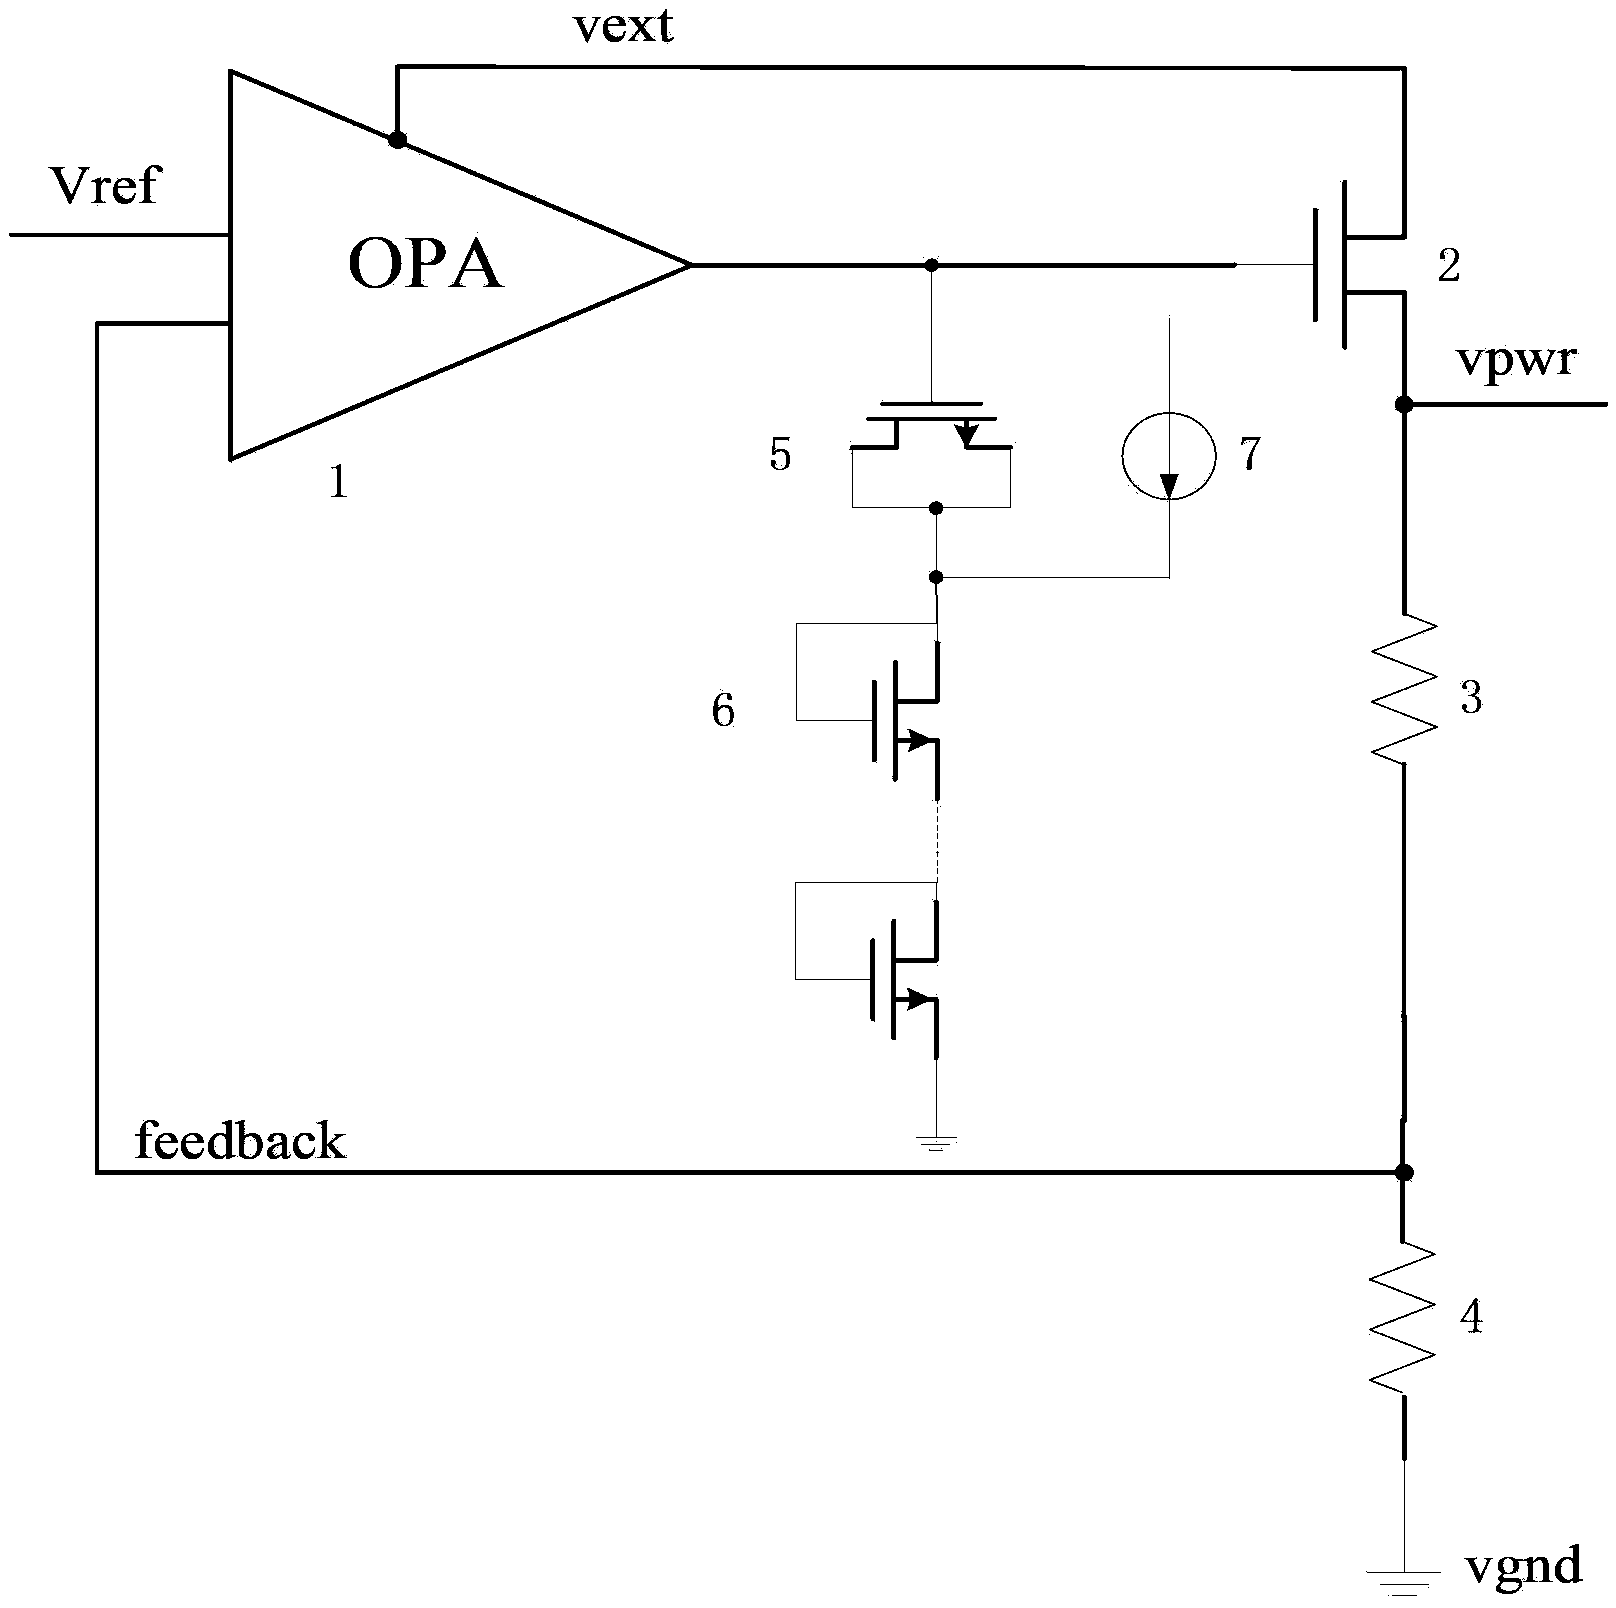 Voltage regulating device